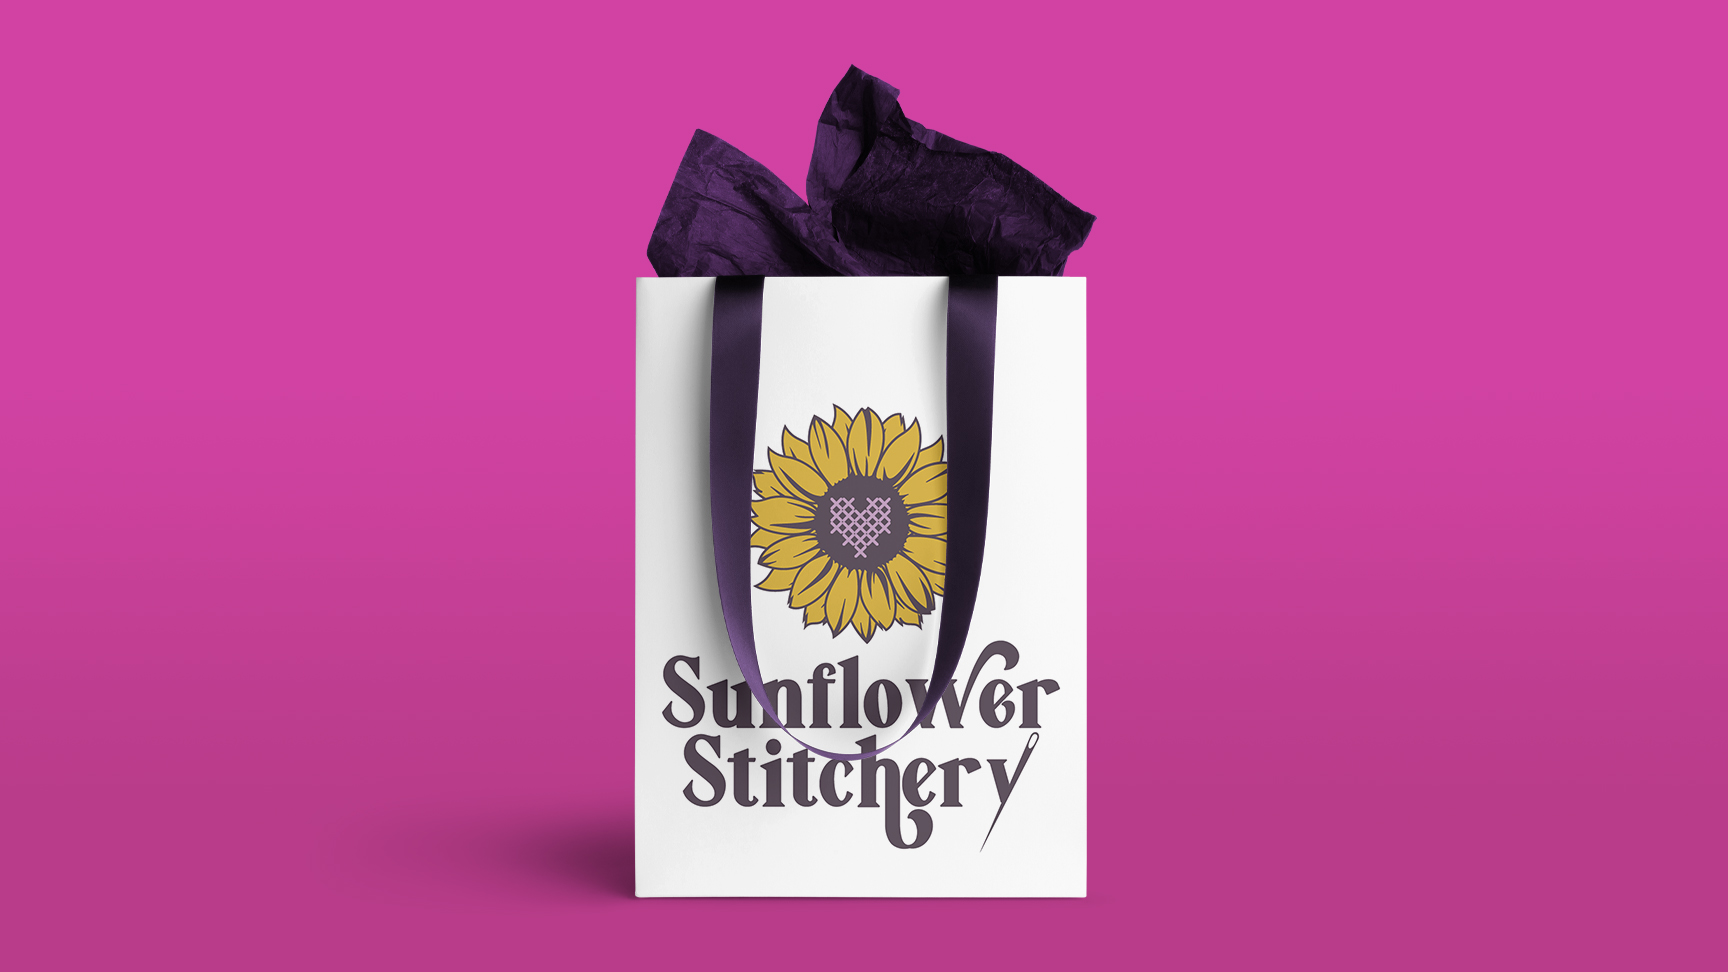 Sunflower Stitchery logo displayed on a gift bag